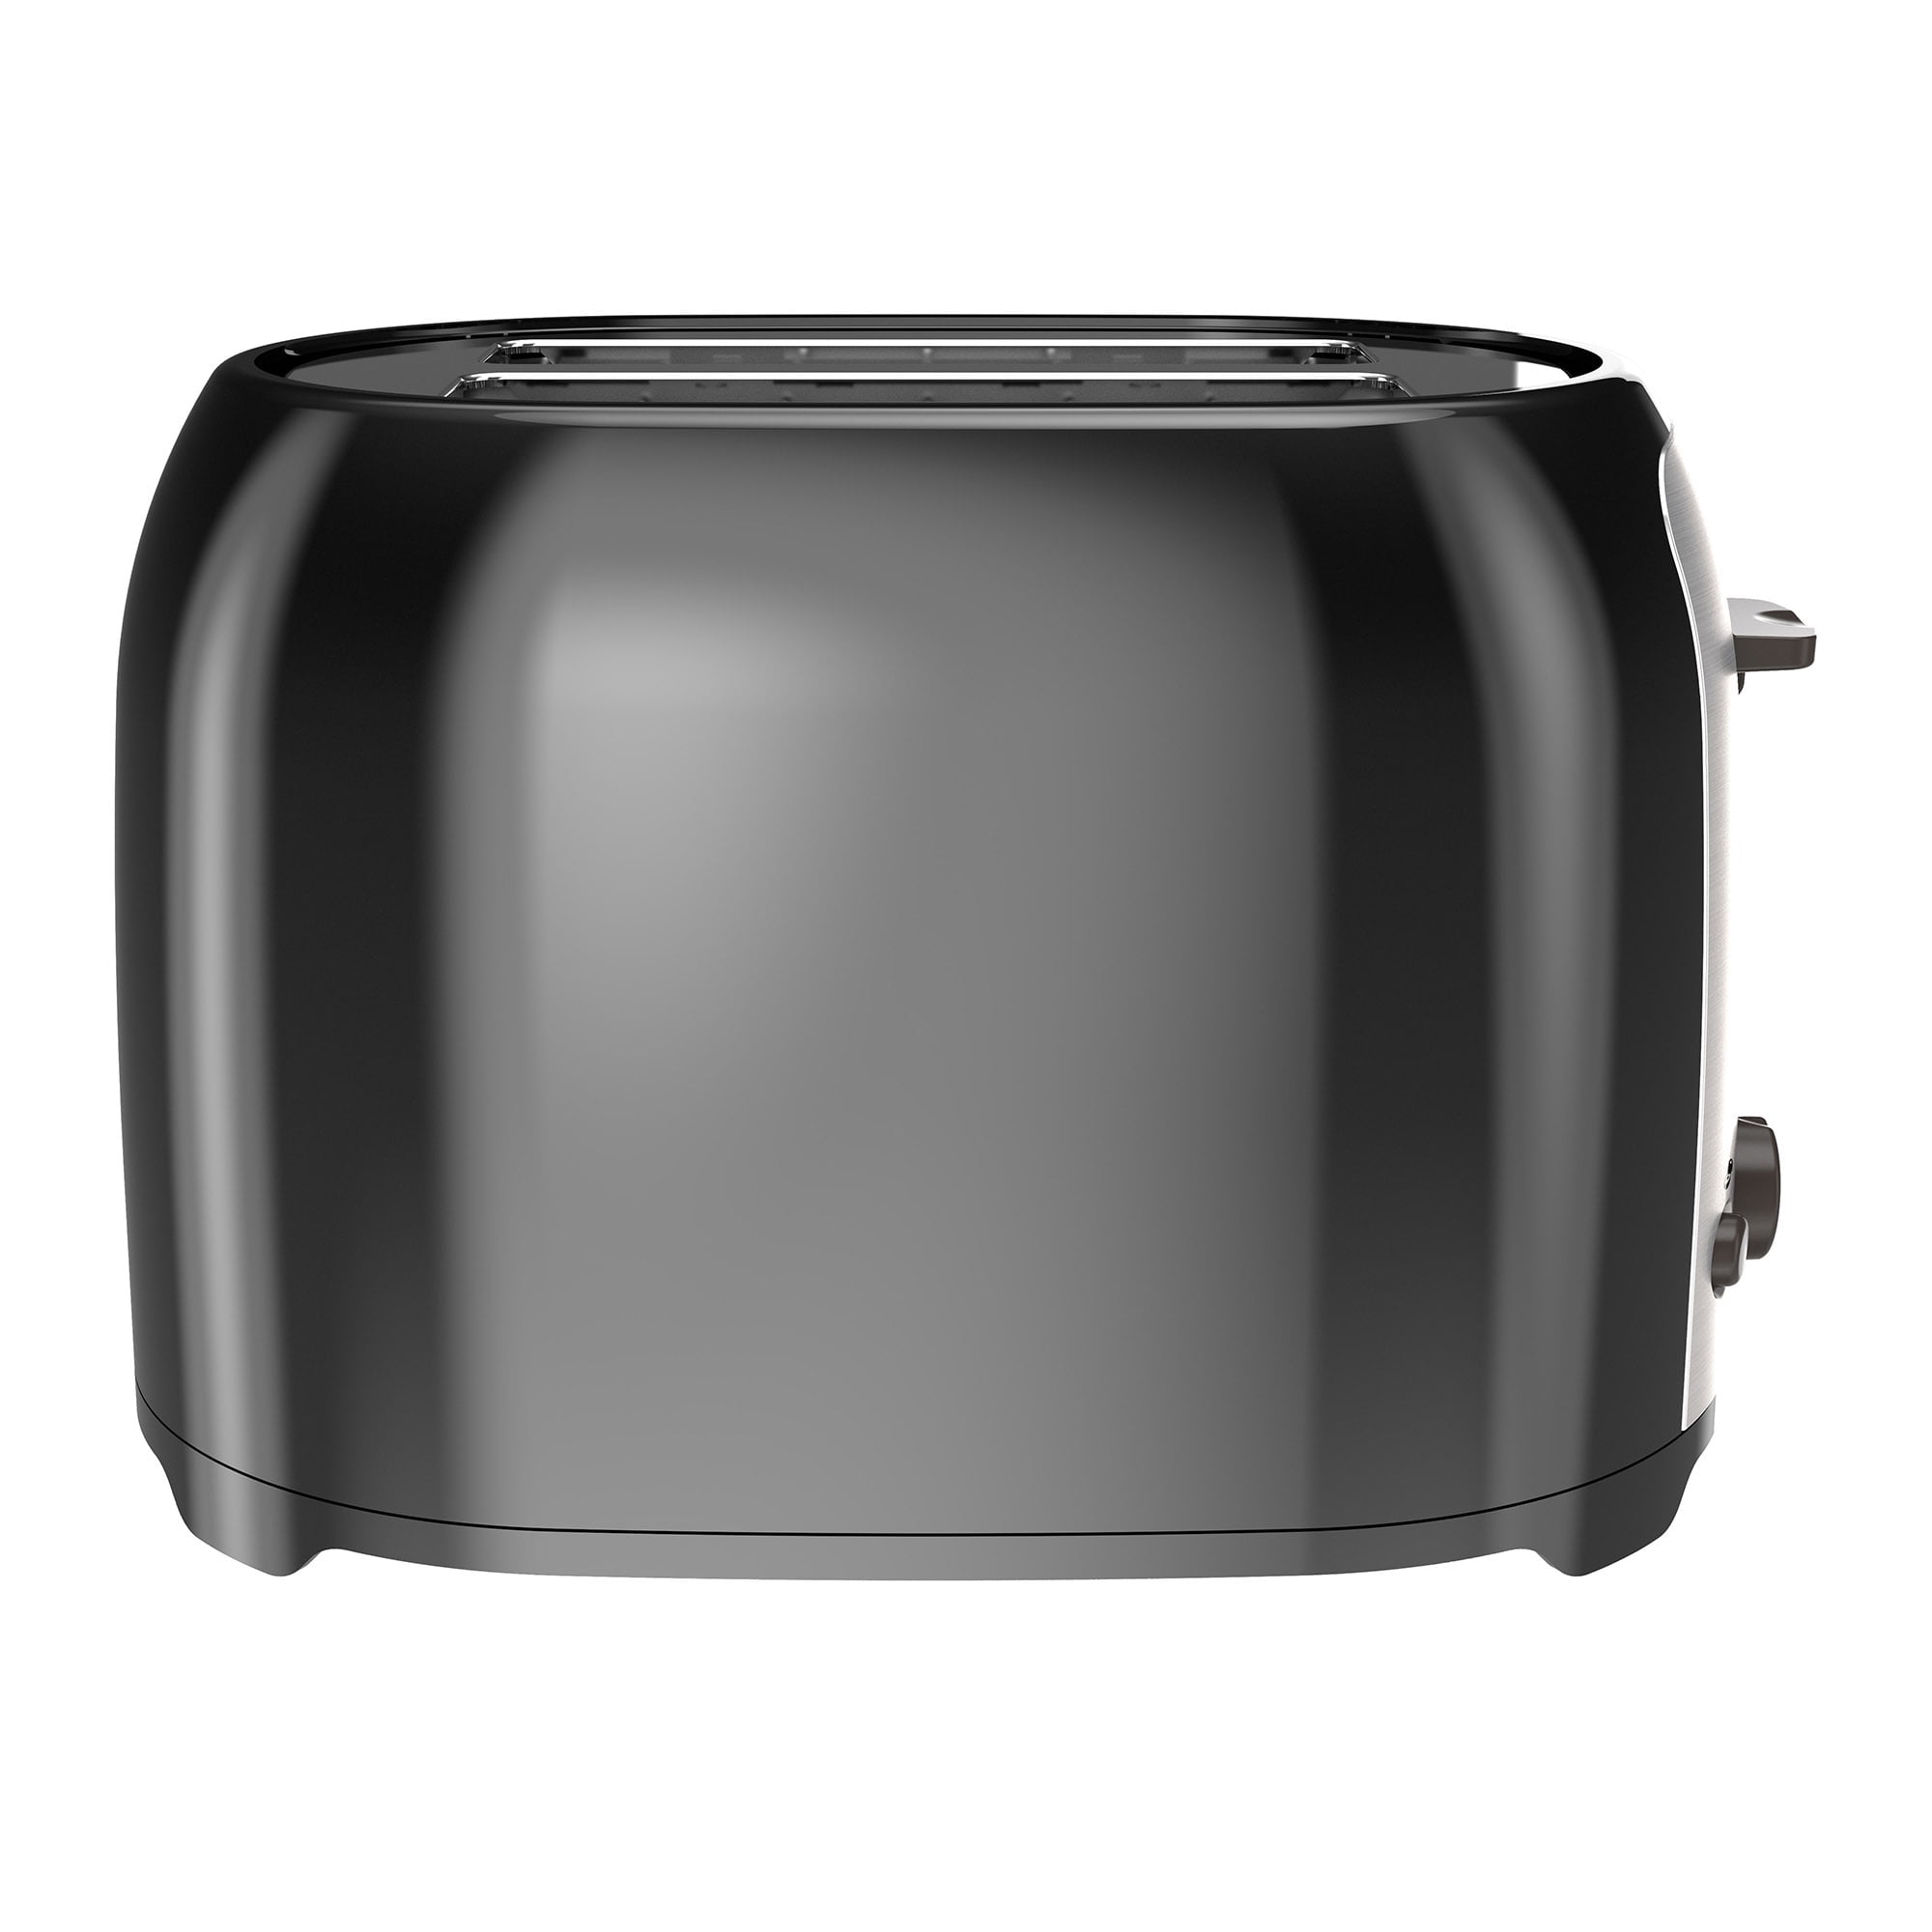 Shop Black+Decker 800w Cool Touch 2 Slice Toaster ET122-B5 at best price